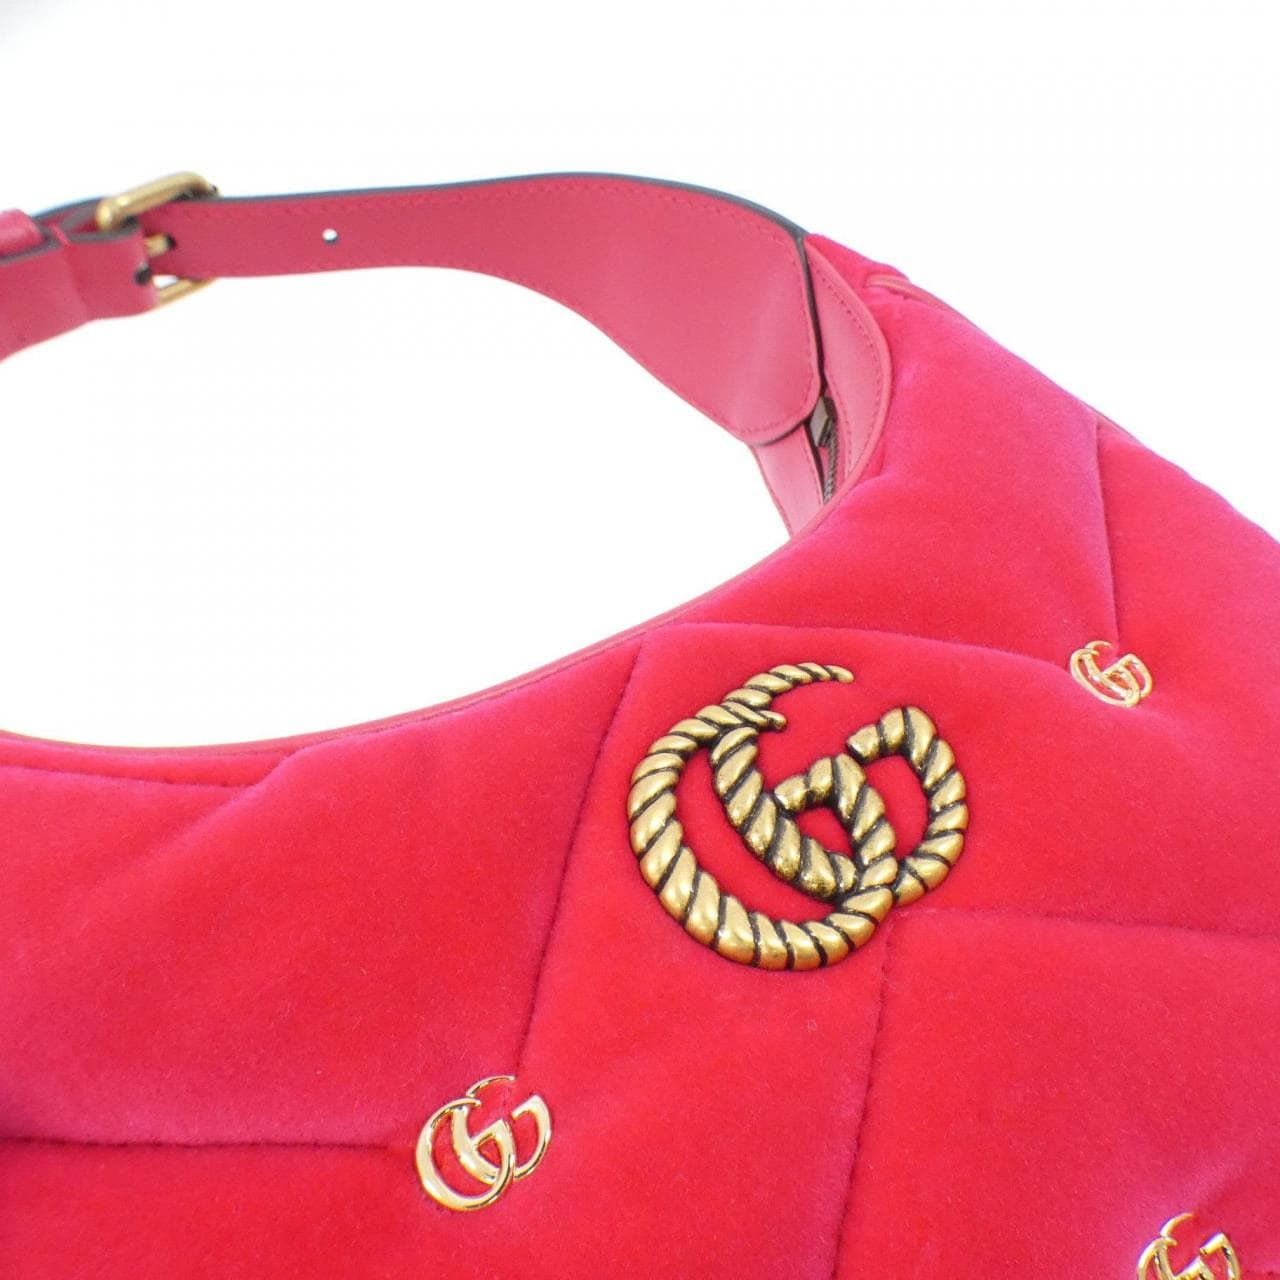 [Unused items] Gucci GG MARMONT 770983 FACK2 shoulder bag